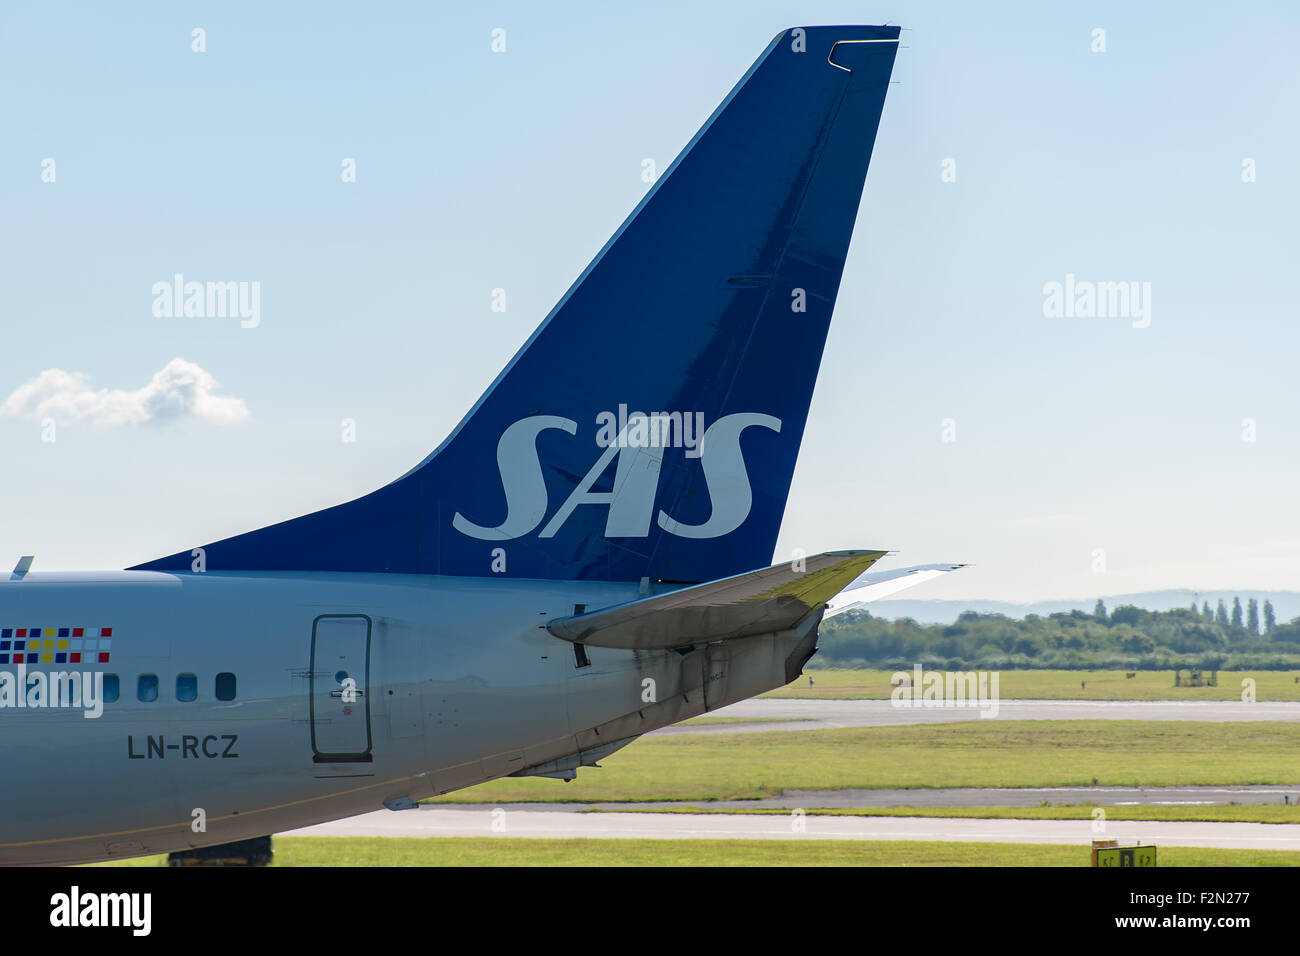 MANCHESTER, REINO UNIDO - 07 Aug, 2015: SAS Scandinavian Airlines Boeing 737 librea de cola en el aeropuerto de Manchester 07 Aug 2015. Foto de stock